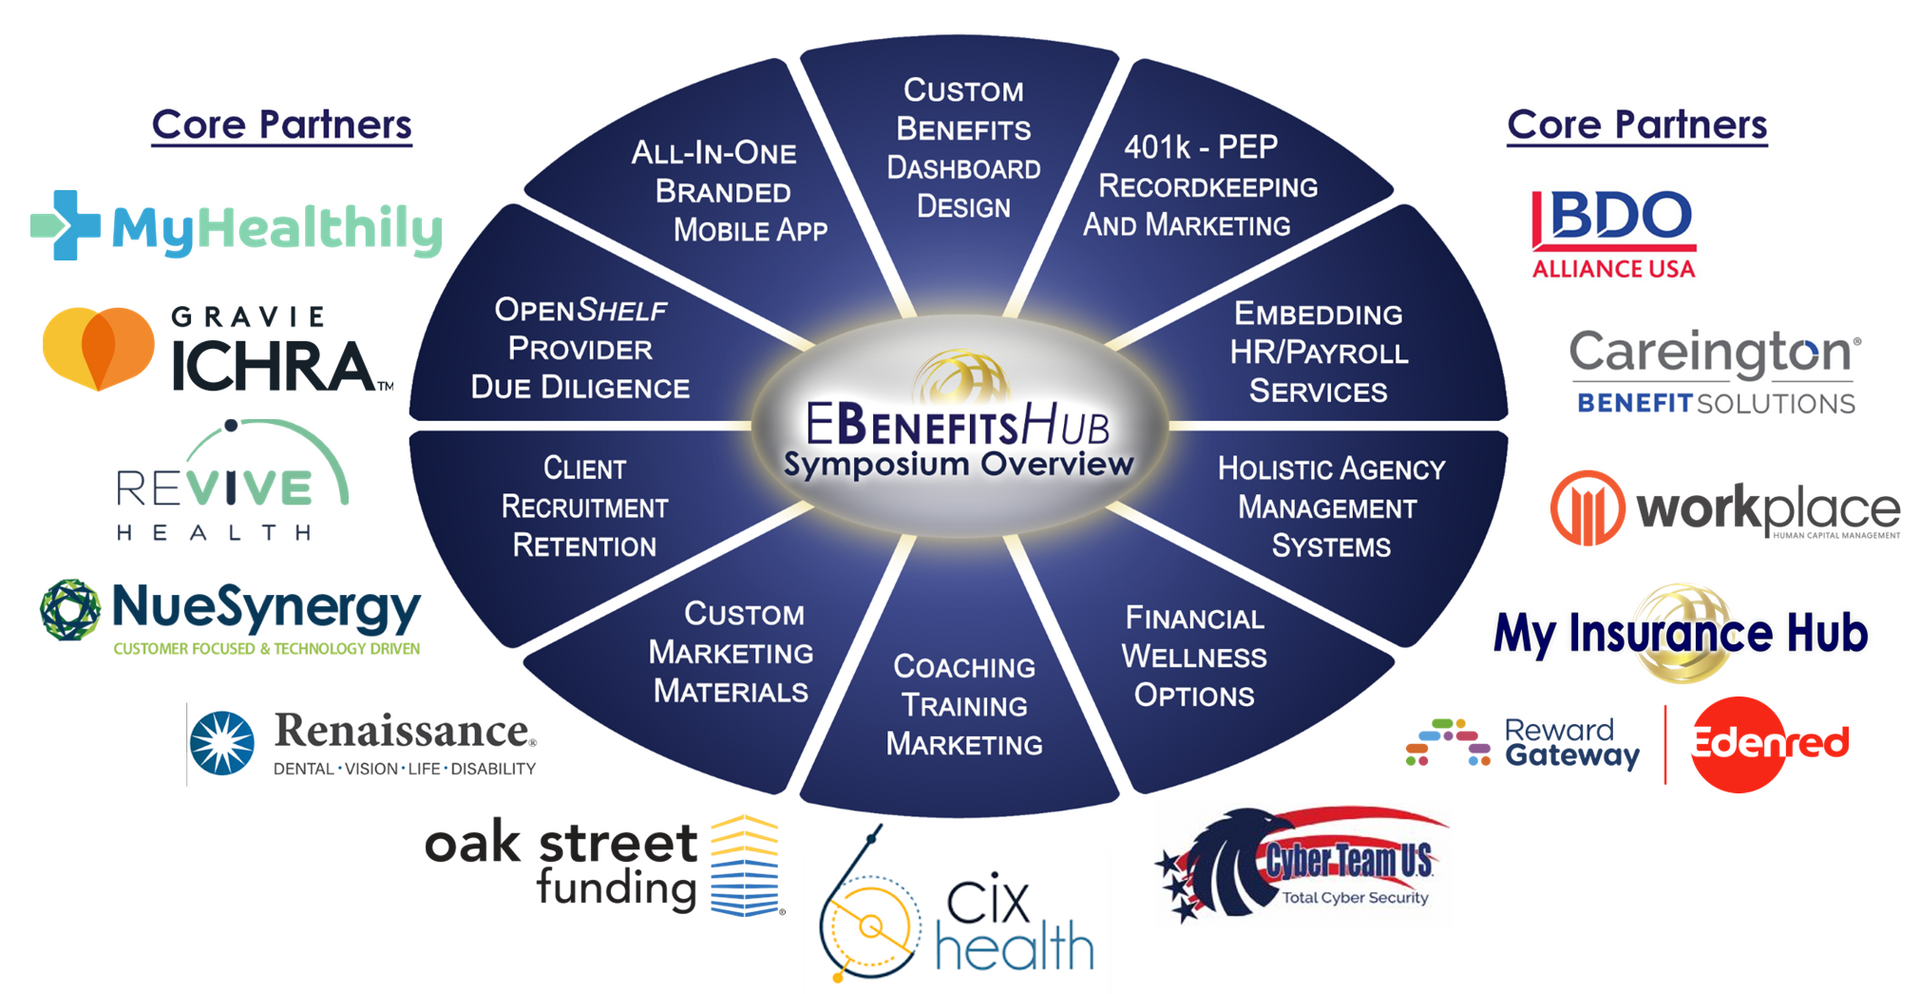 EBenefits Hub empowers benefits professionals